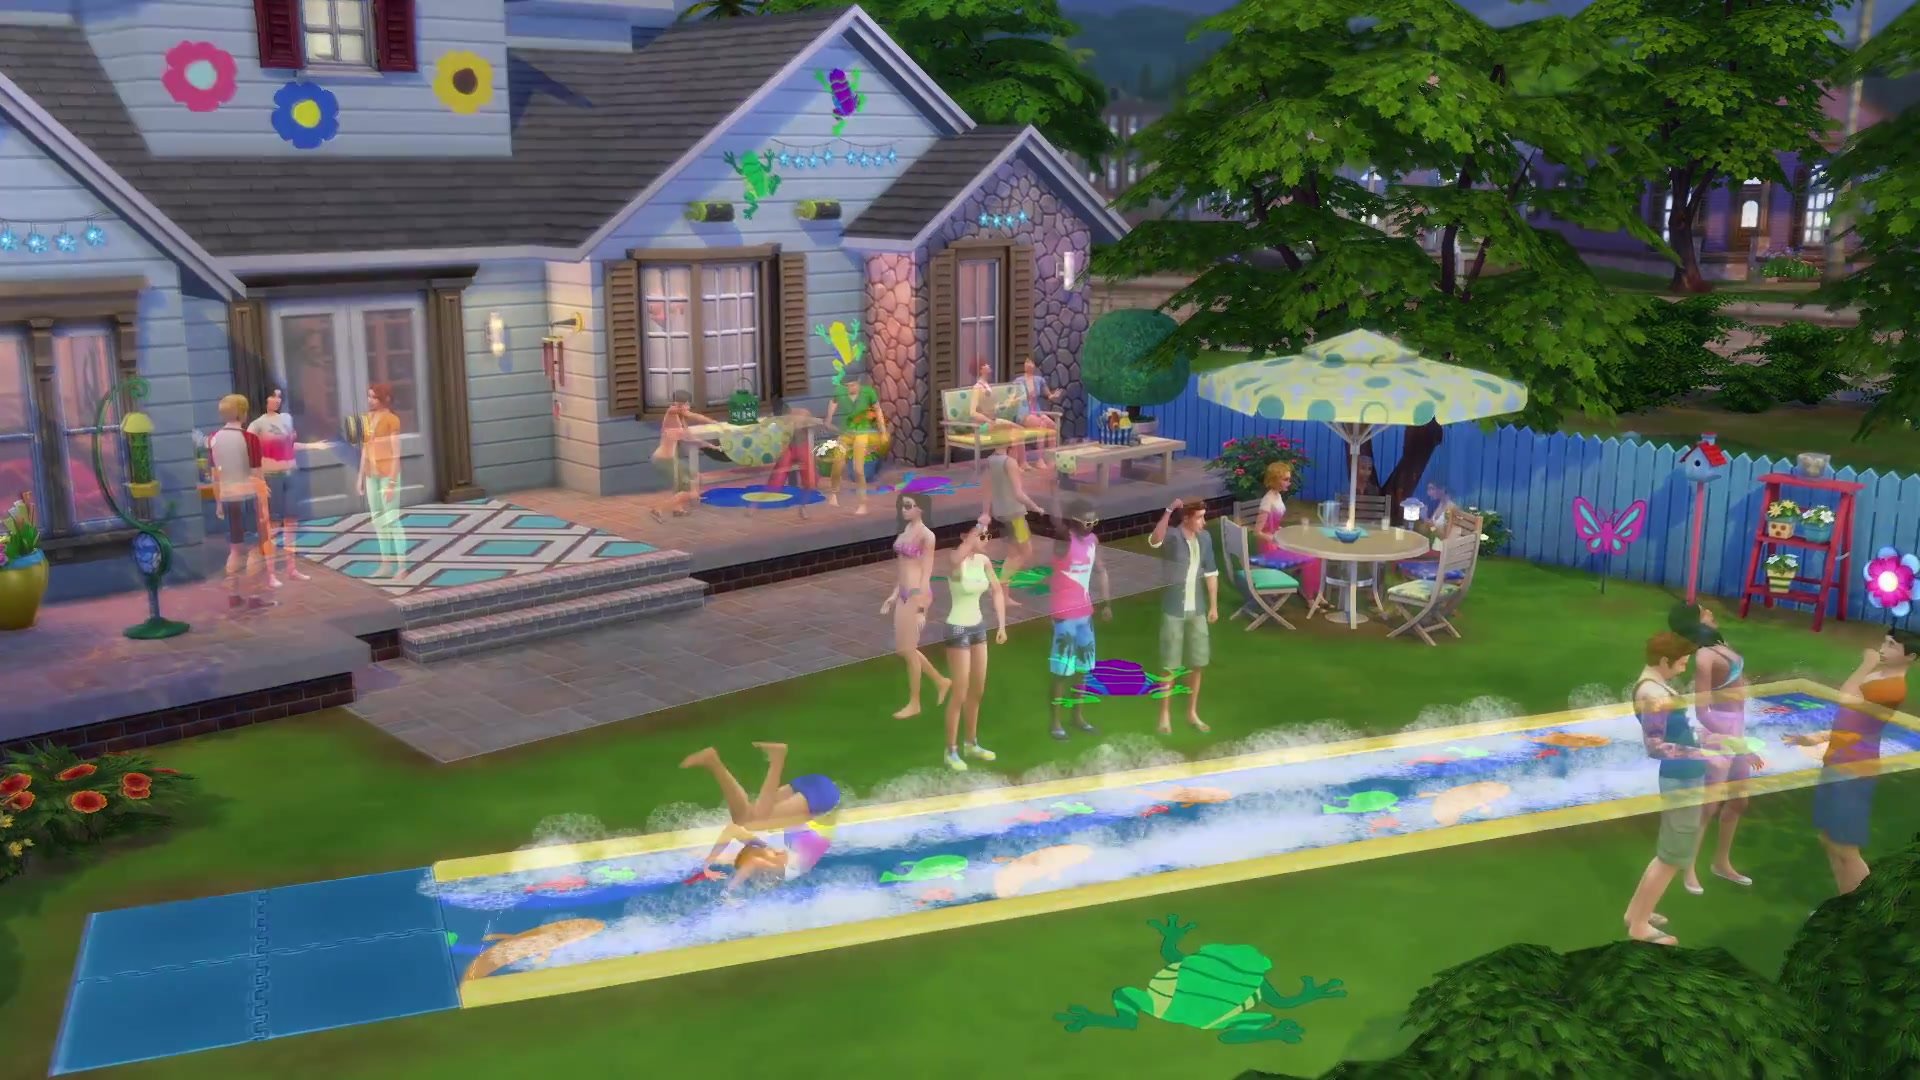 ESD The Sims 4 Zahrada za domem 